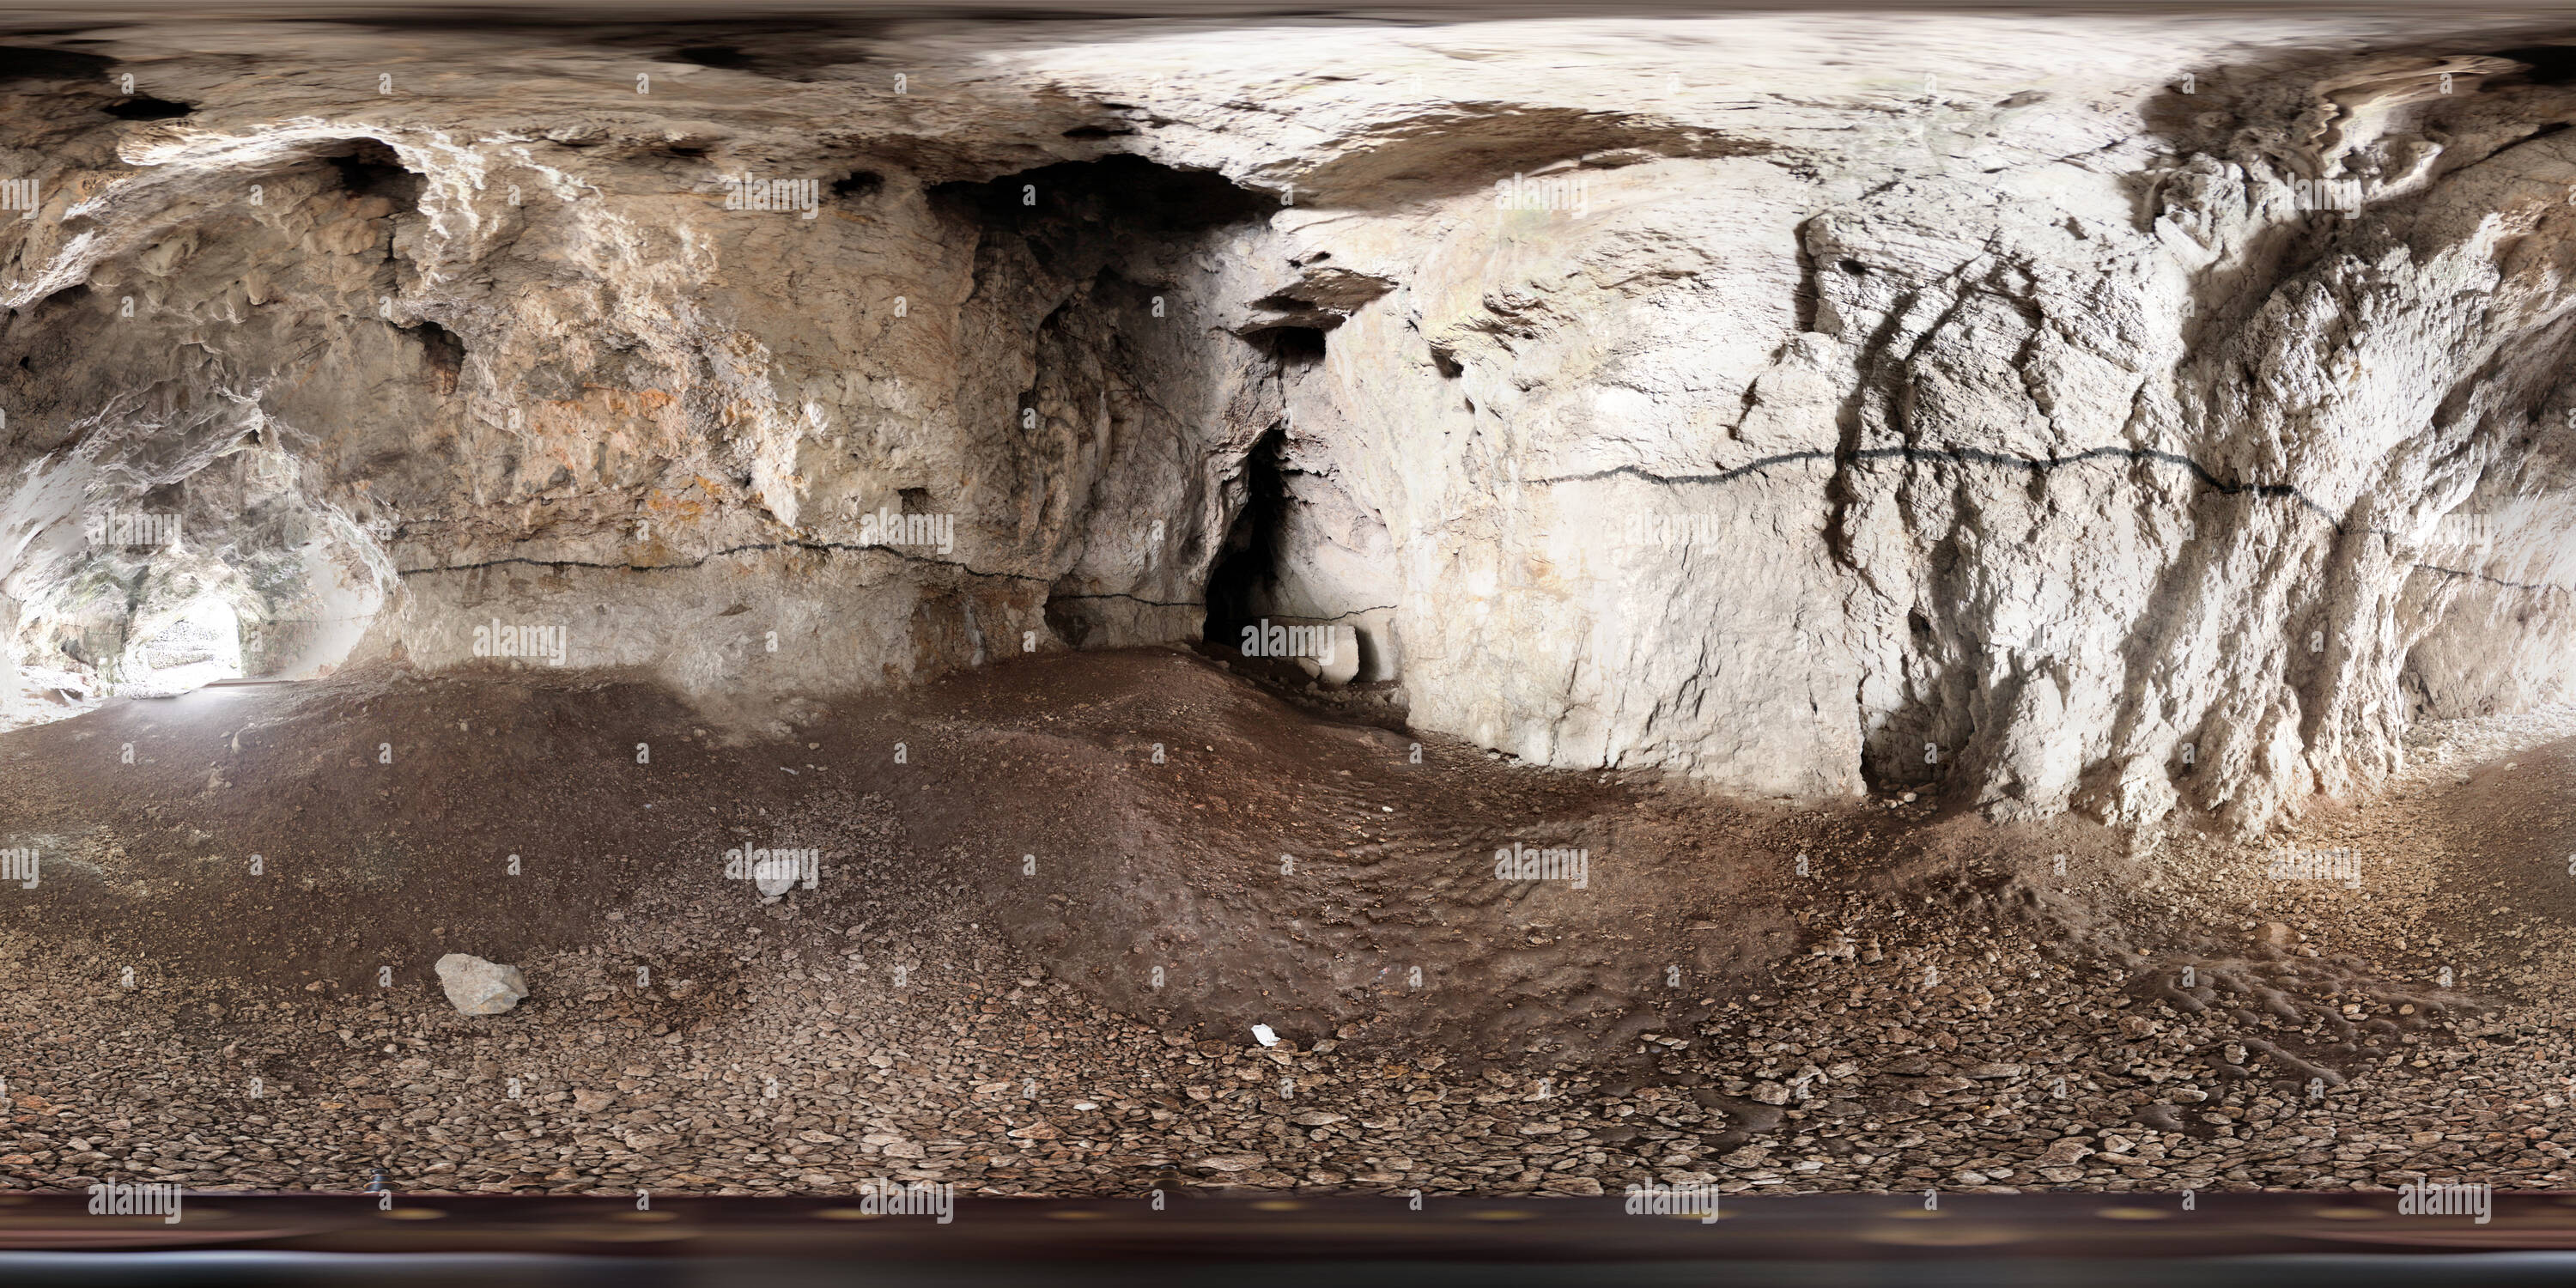 360 degree panoramic view of Szeleta barlang